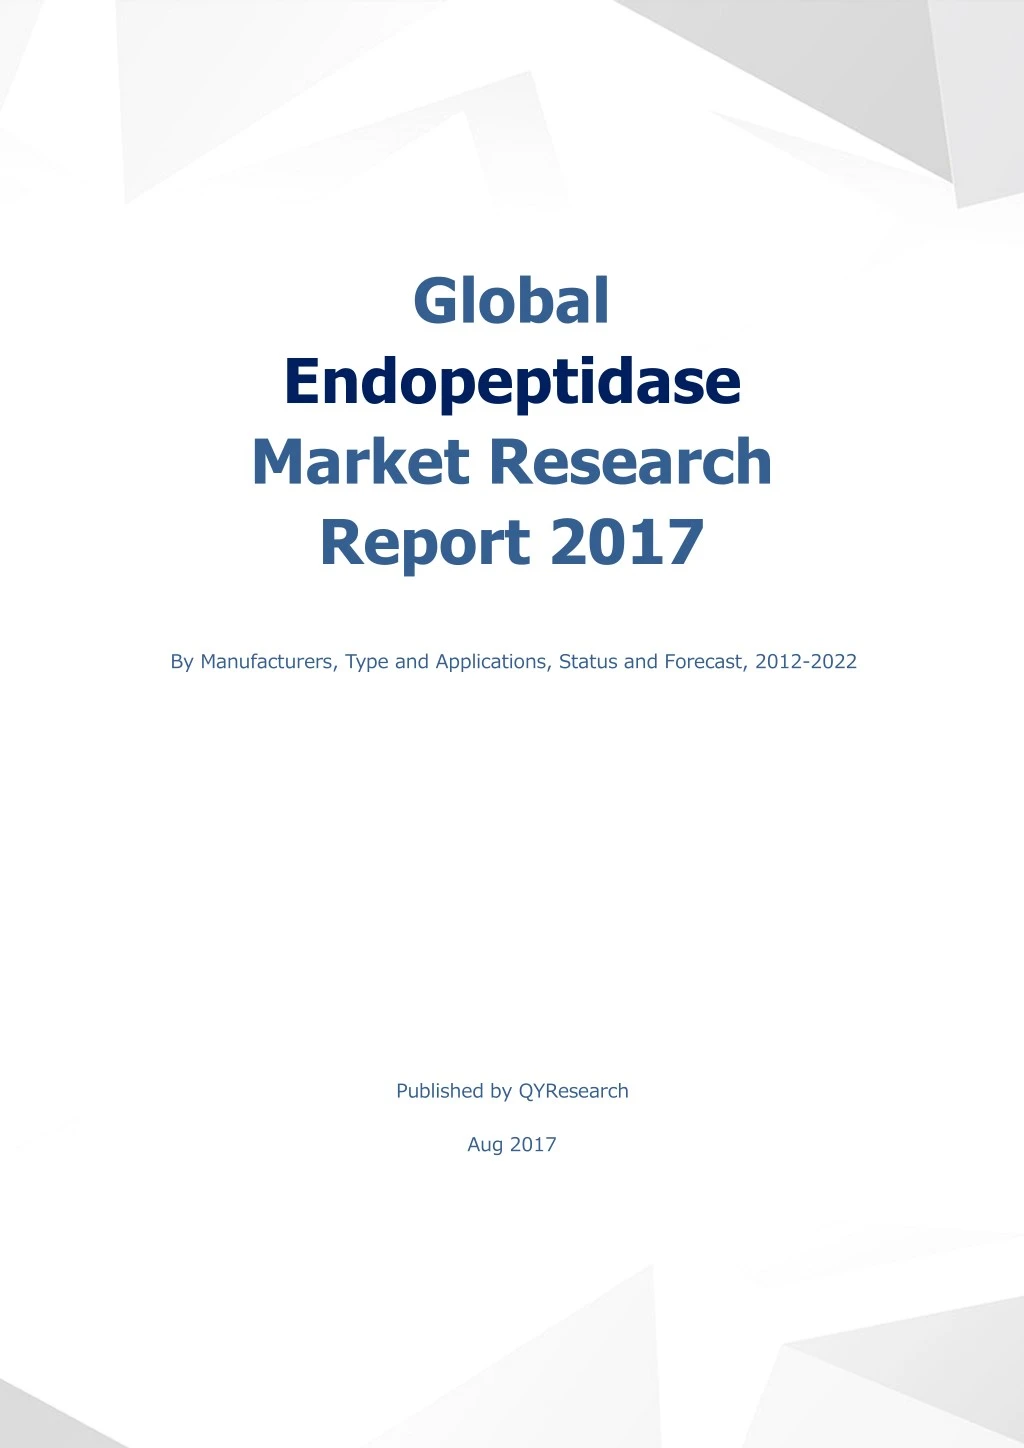 global elastase market research report 2017